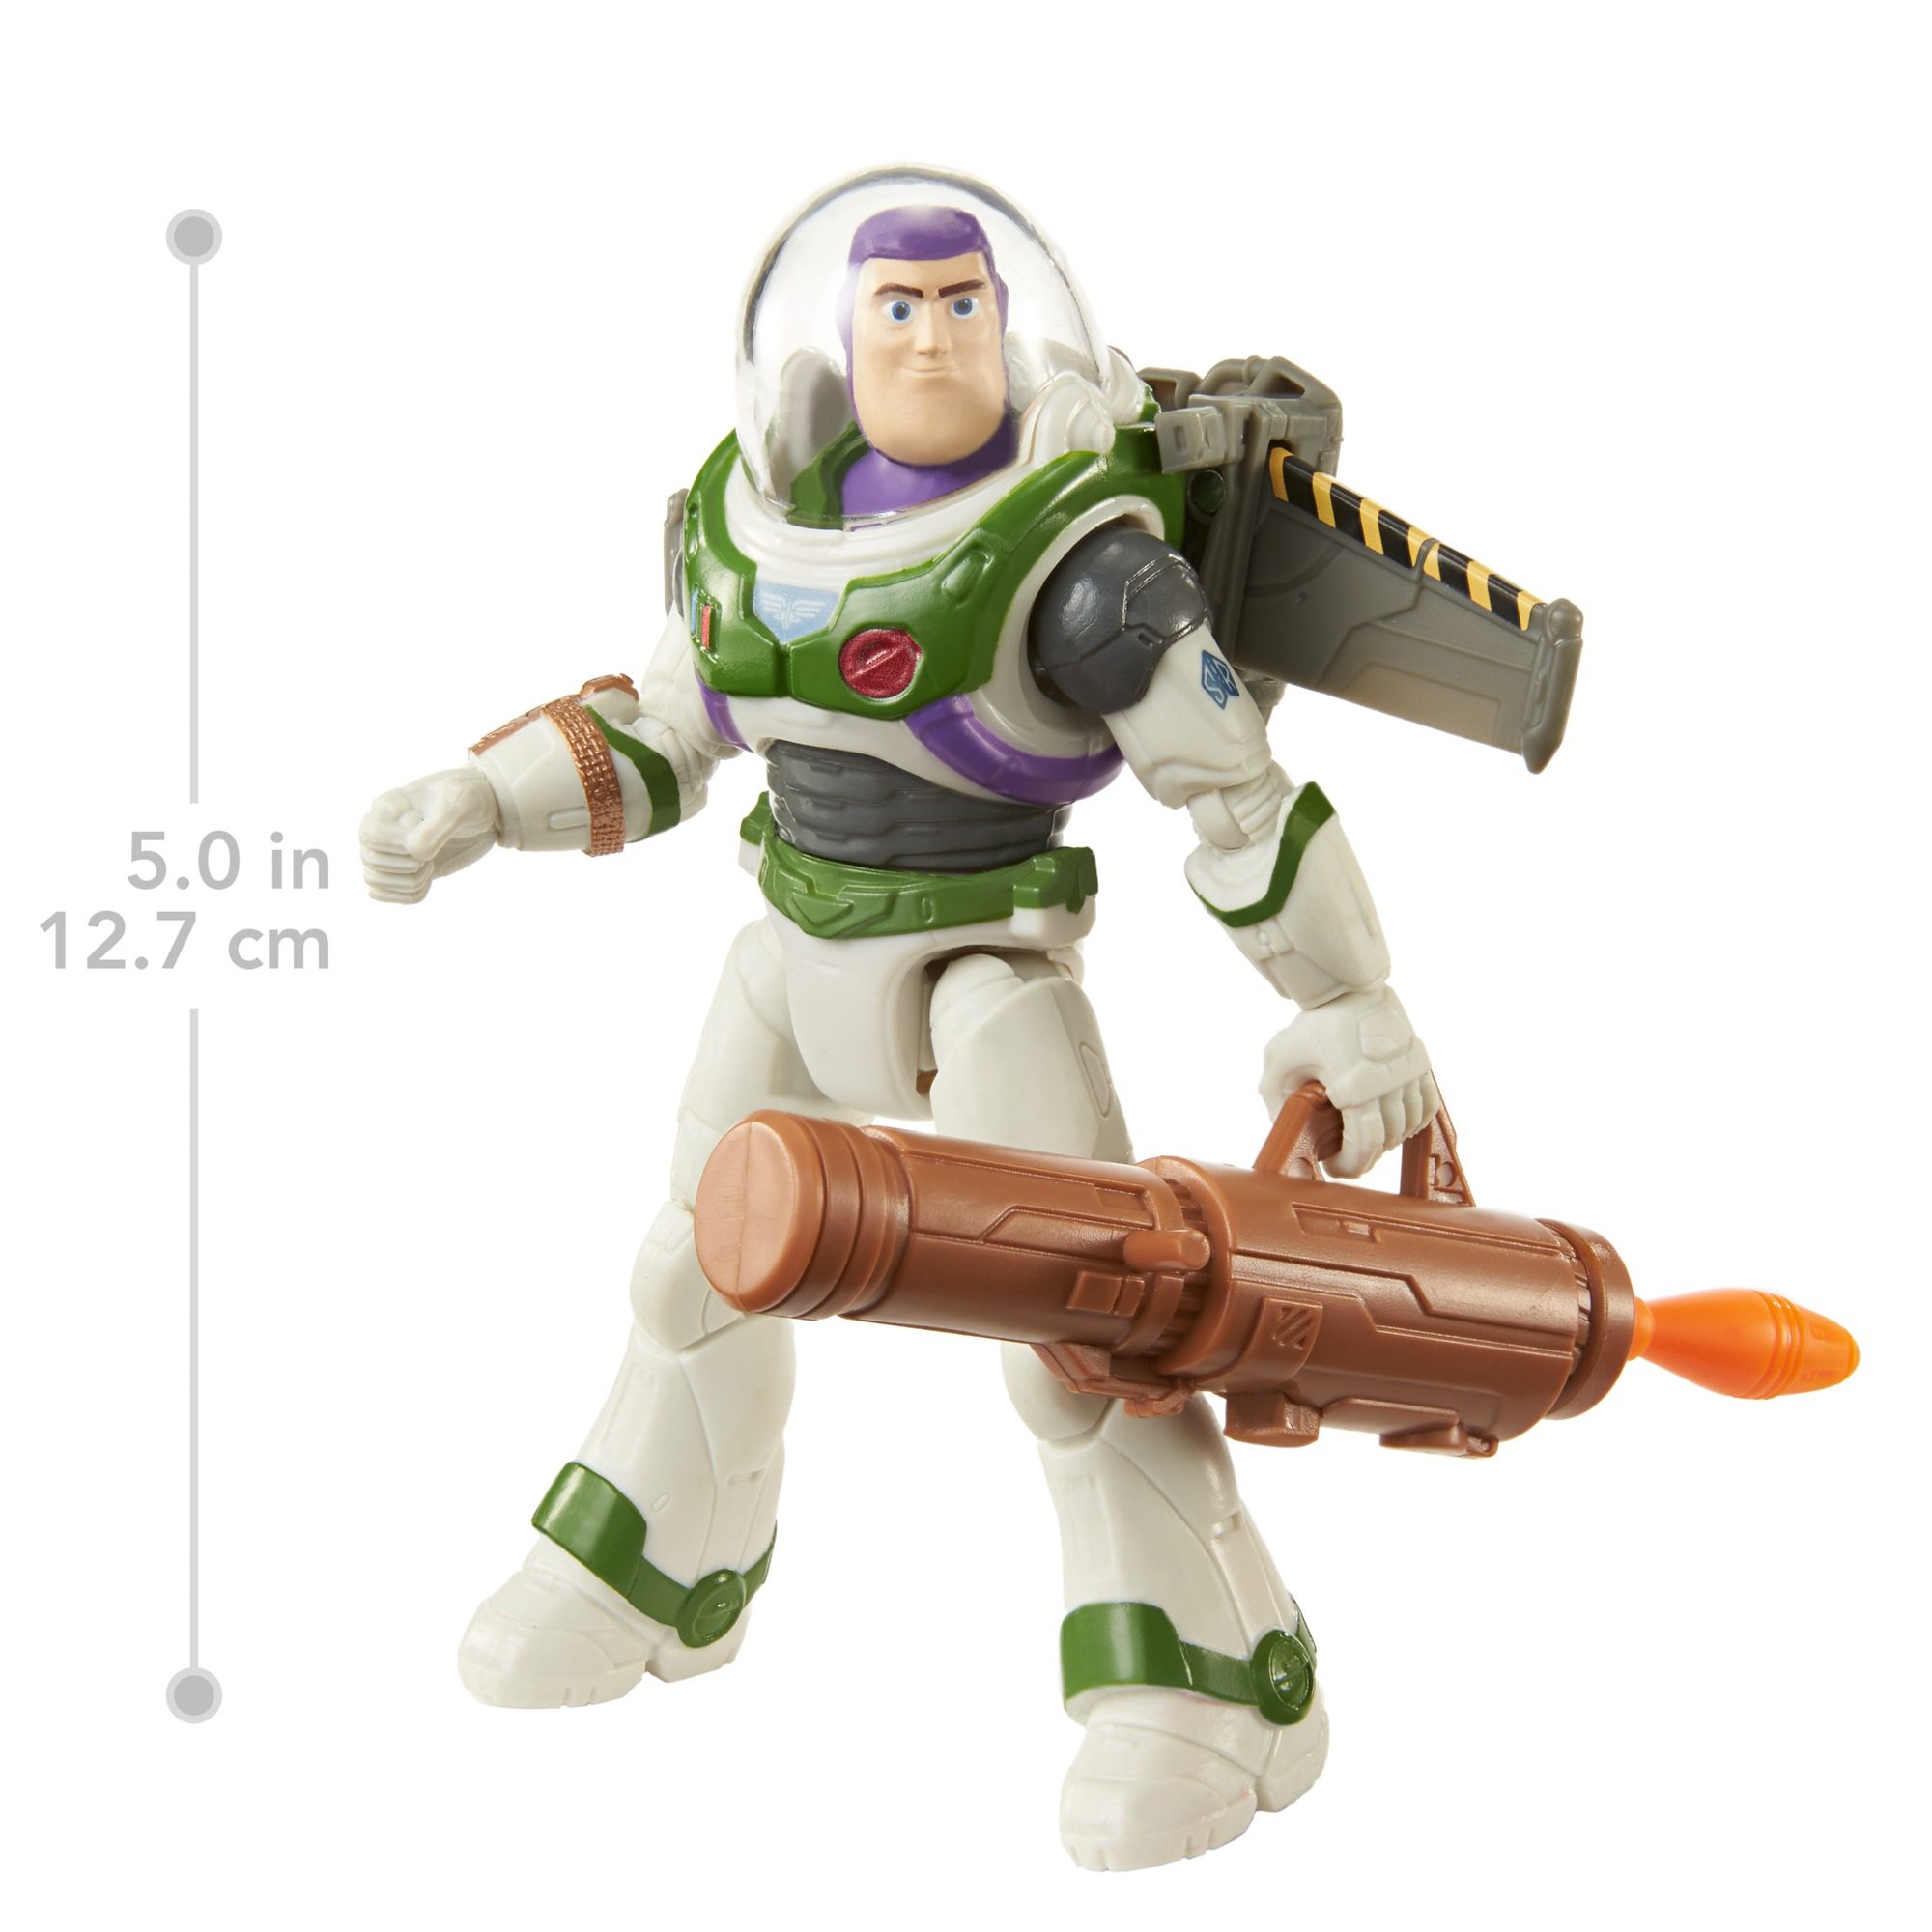 Disney pixar lightyear - mission equipped buzz lightyear figure, giocattolo per bambini 4+ anni, hhj86 - Lightyear